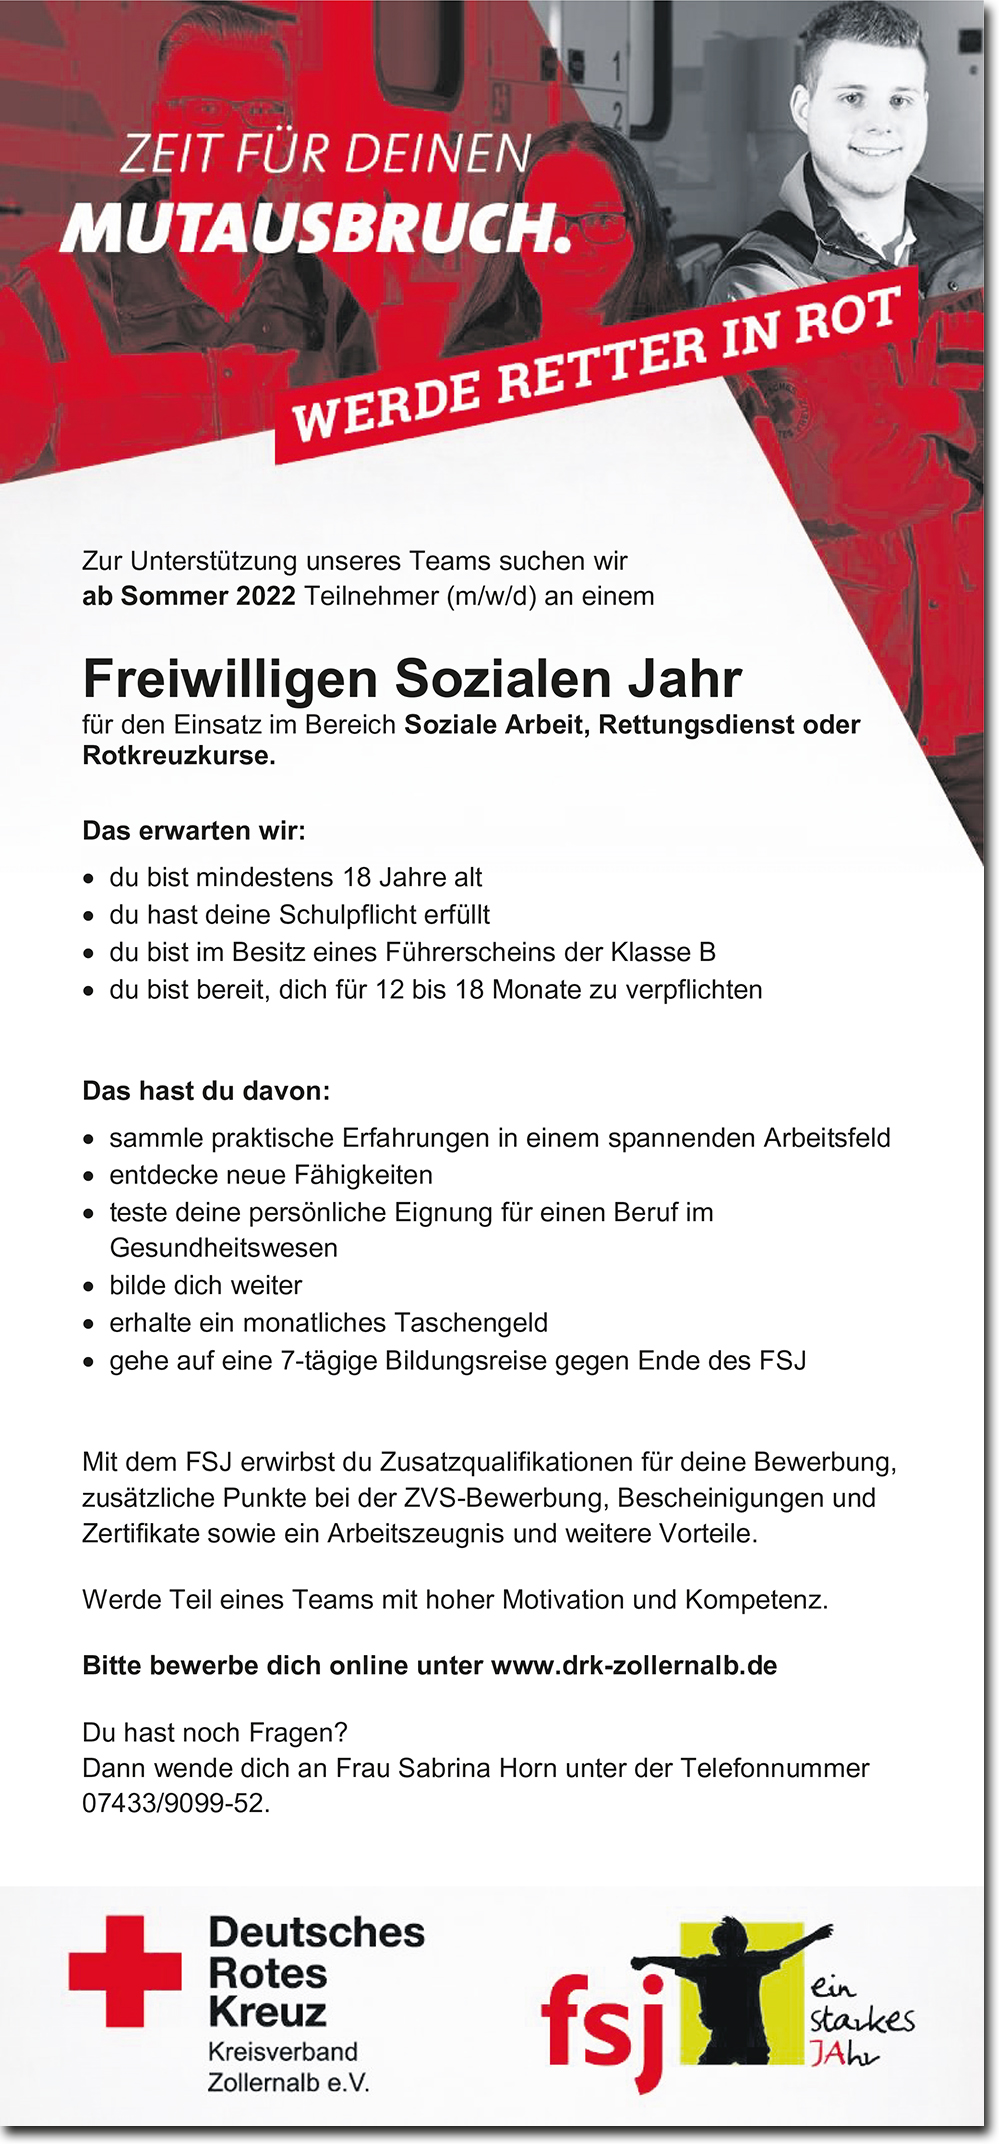 Deutsches Rotes Kreuz Kreisverband Zollernalb e.V.